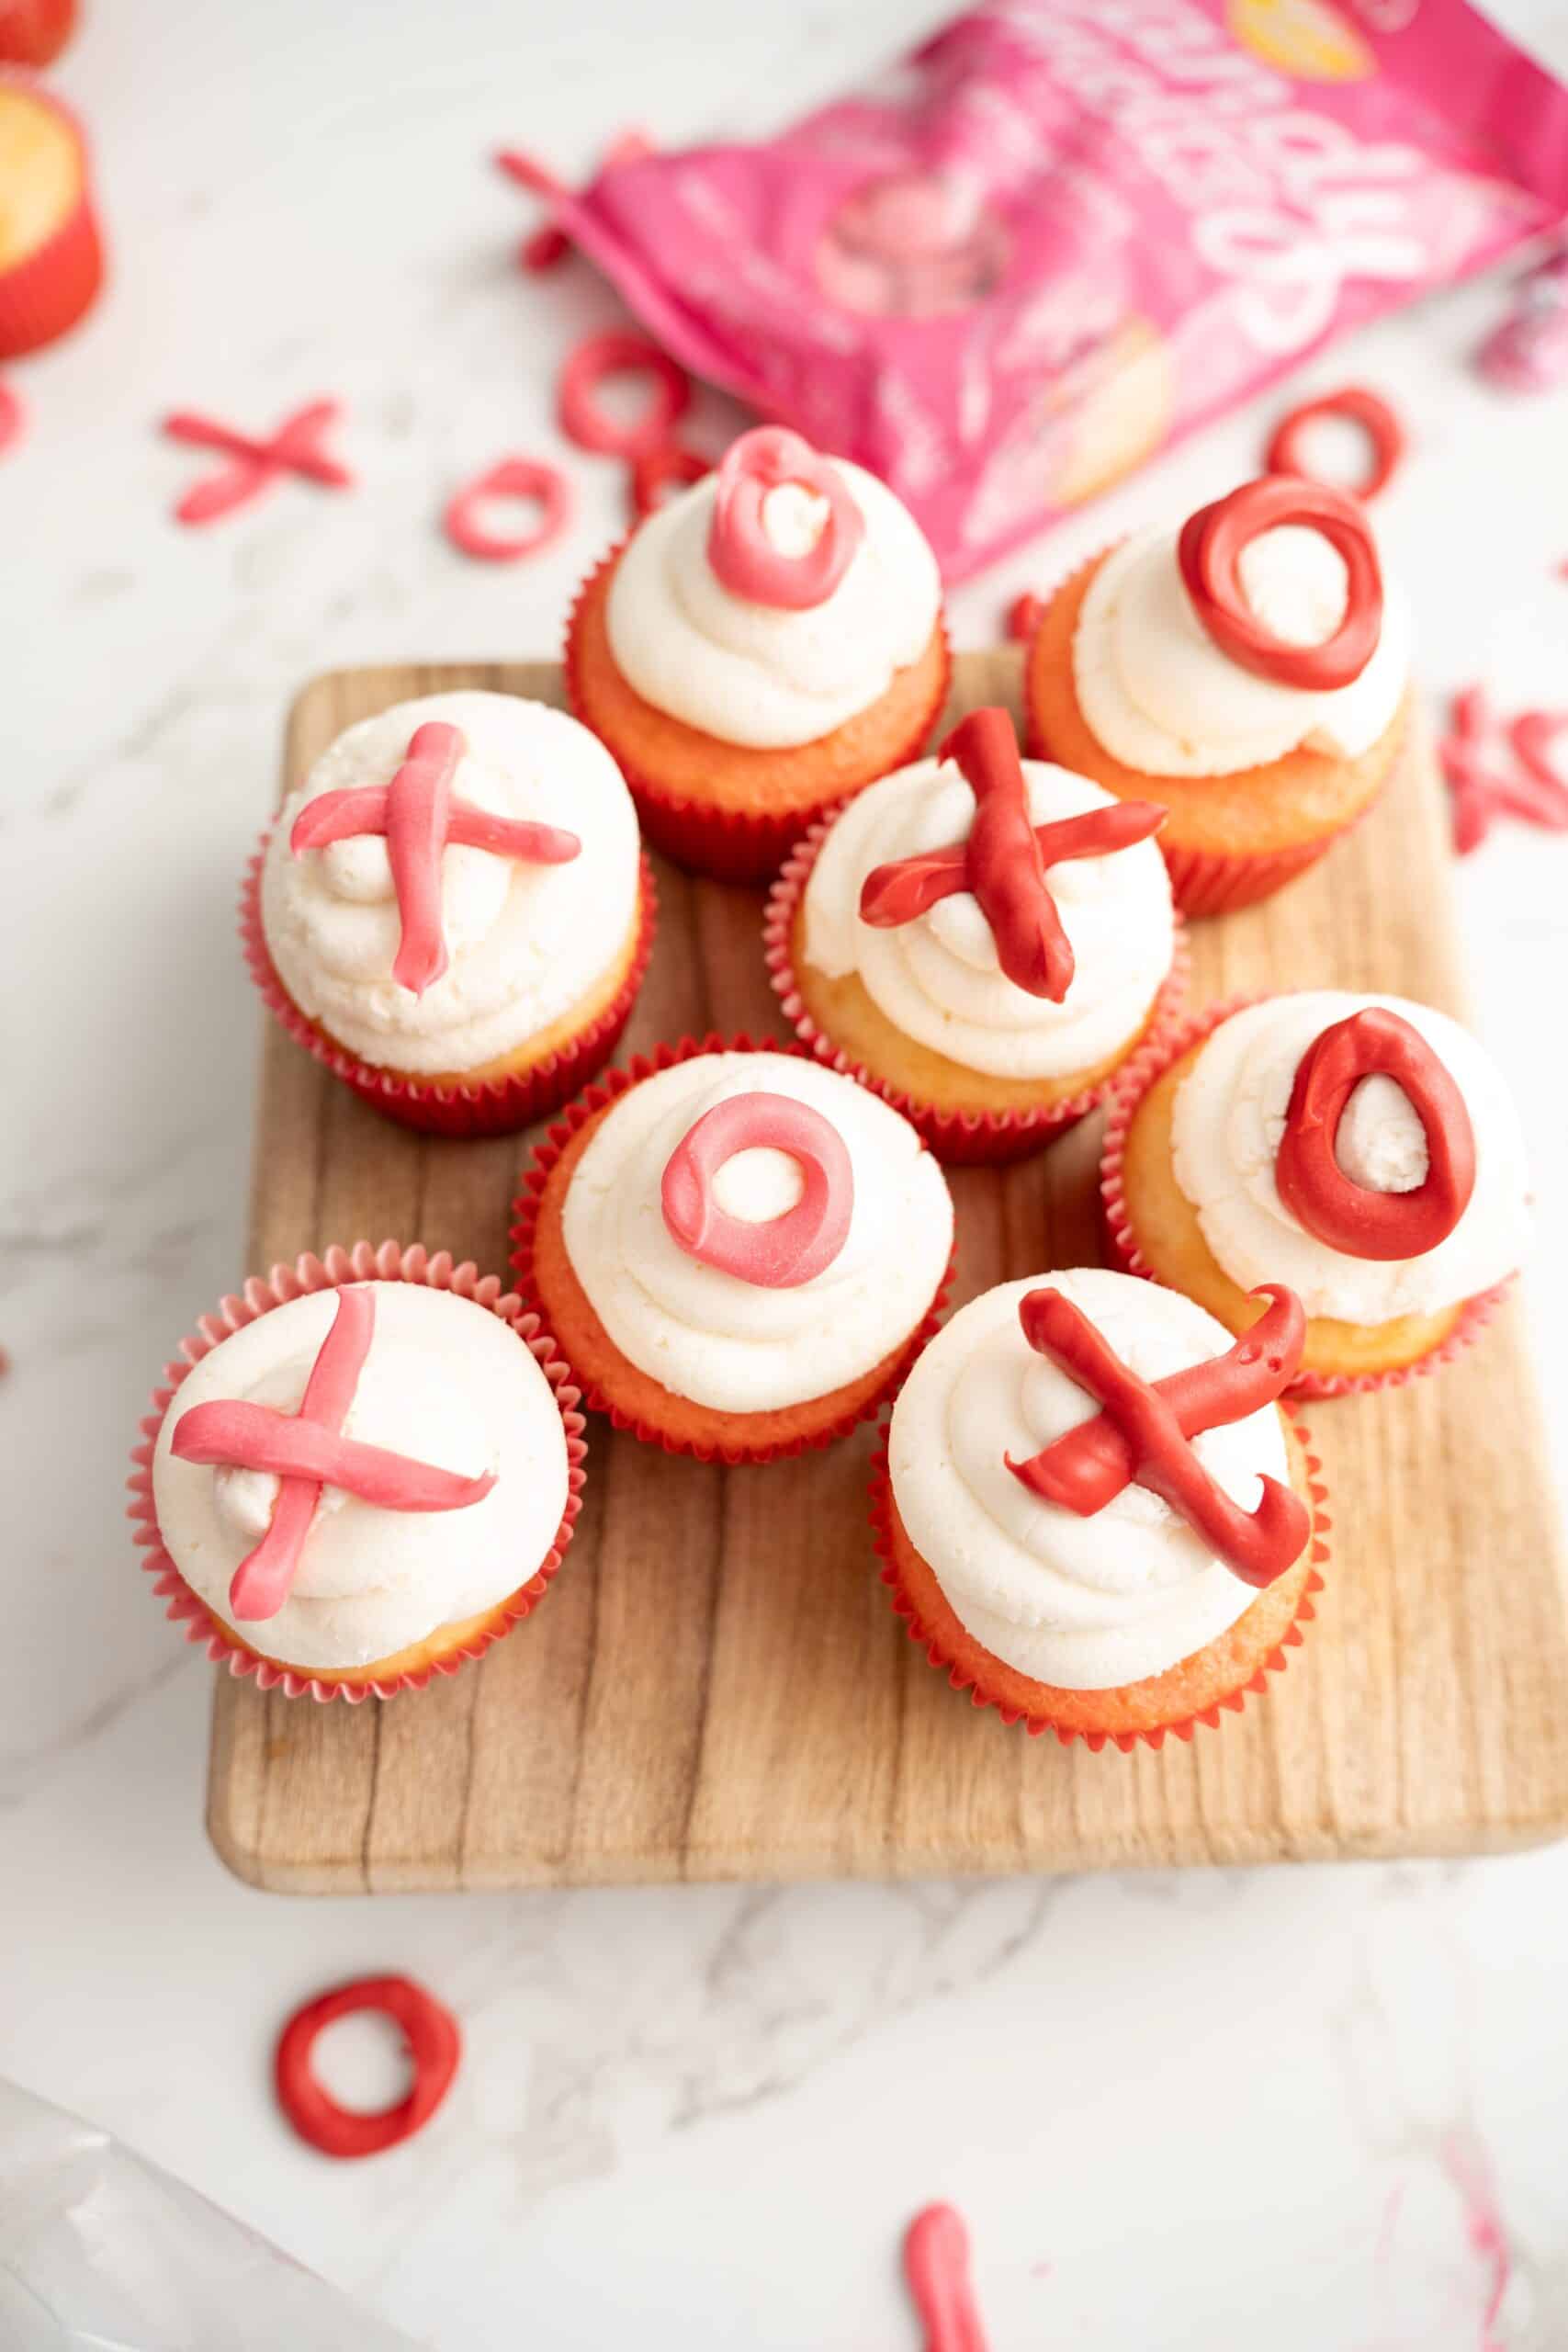 XOXO cupcakes (edible Valentine cupcake toppers)